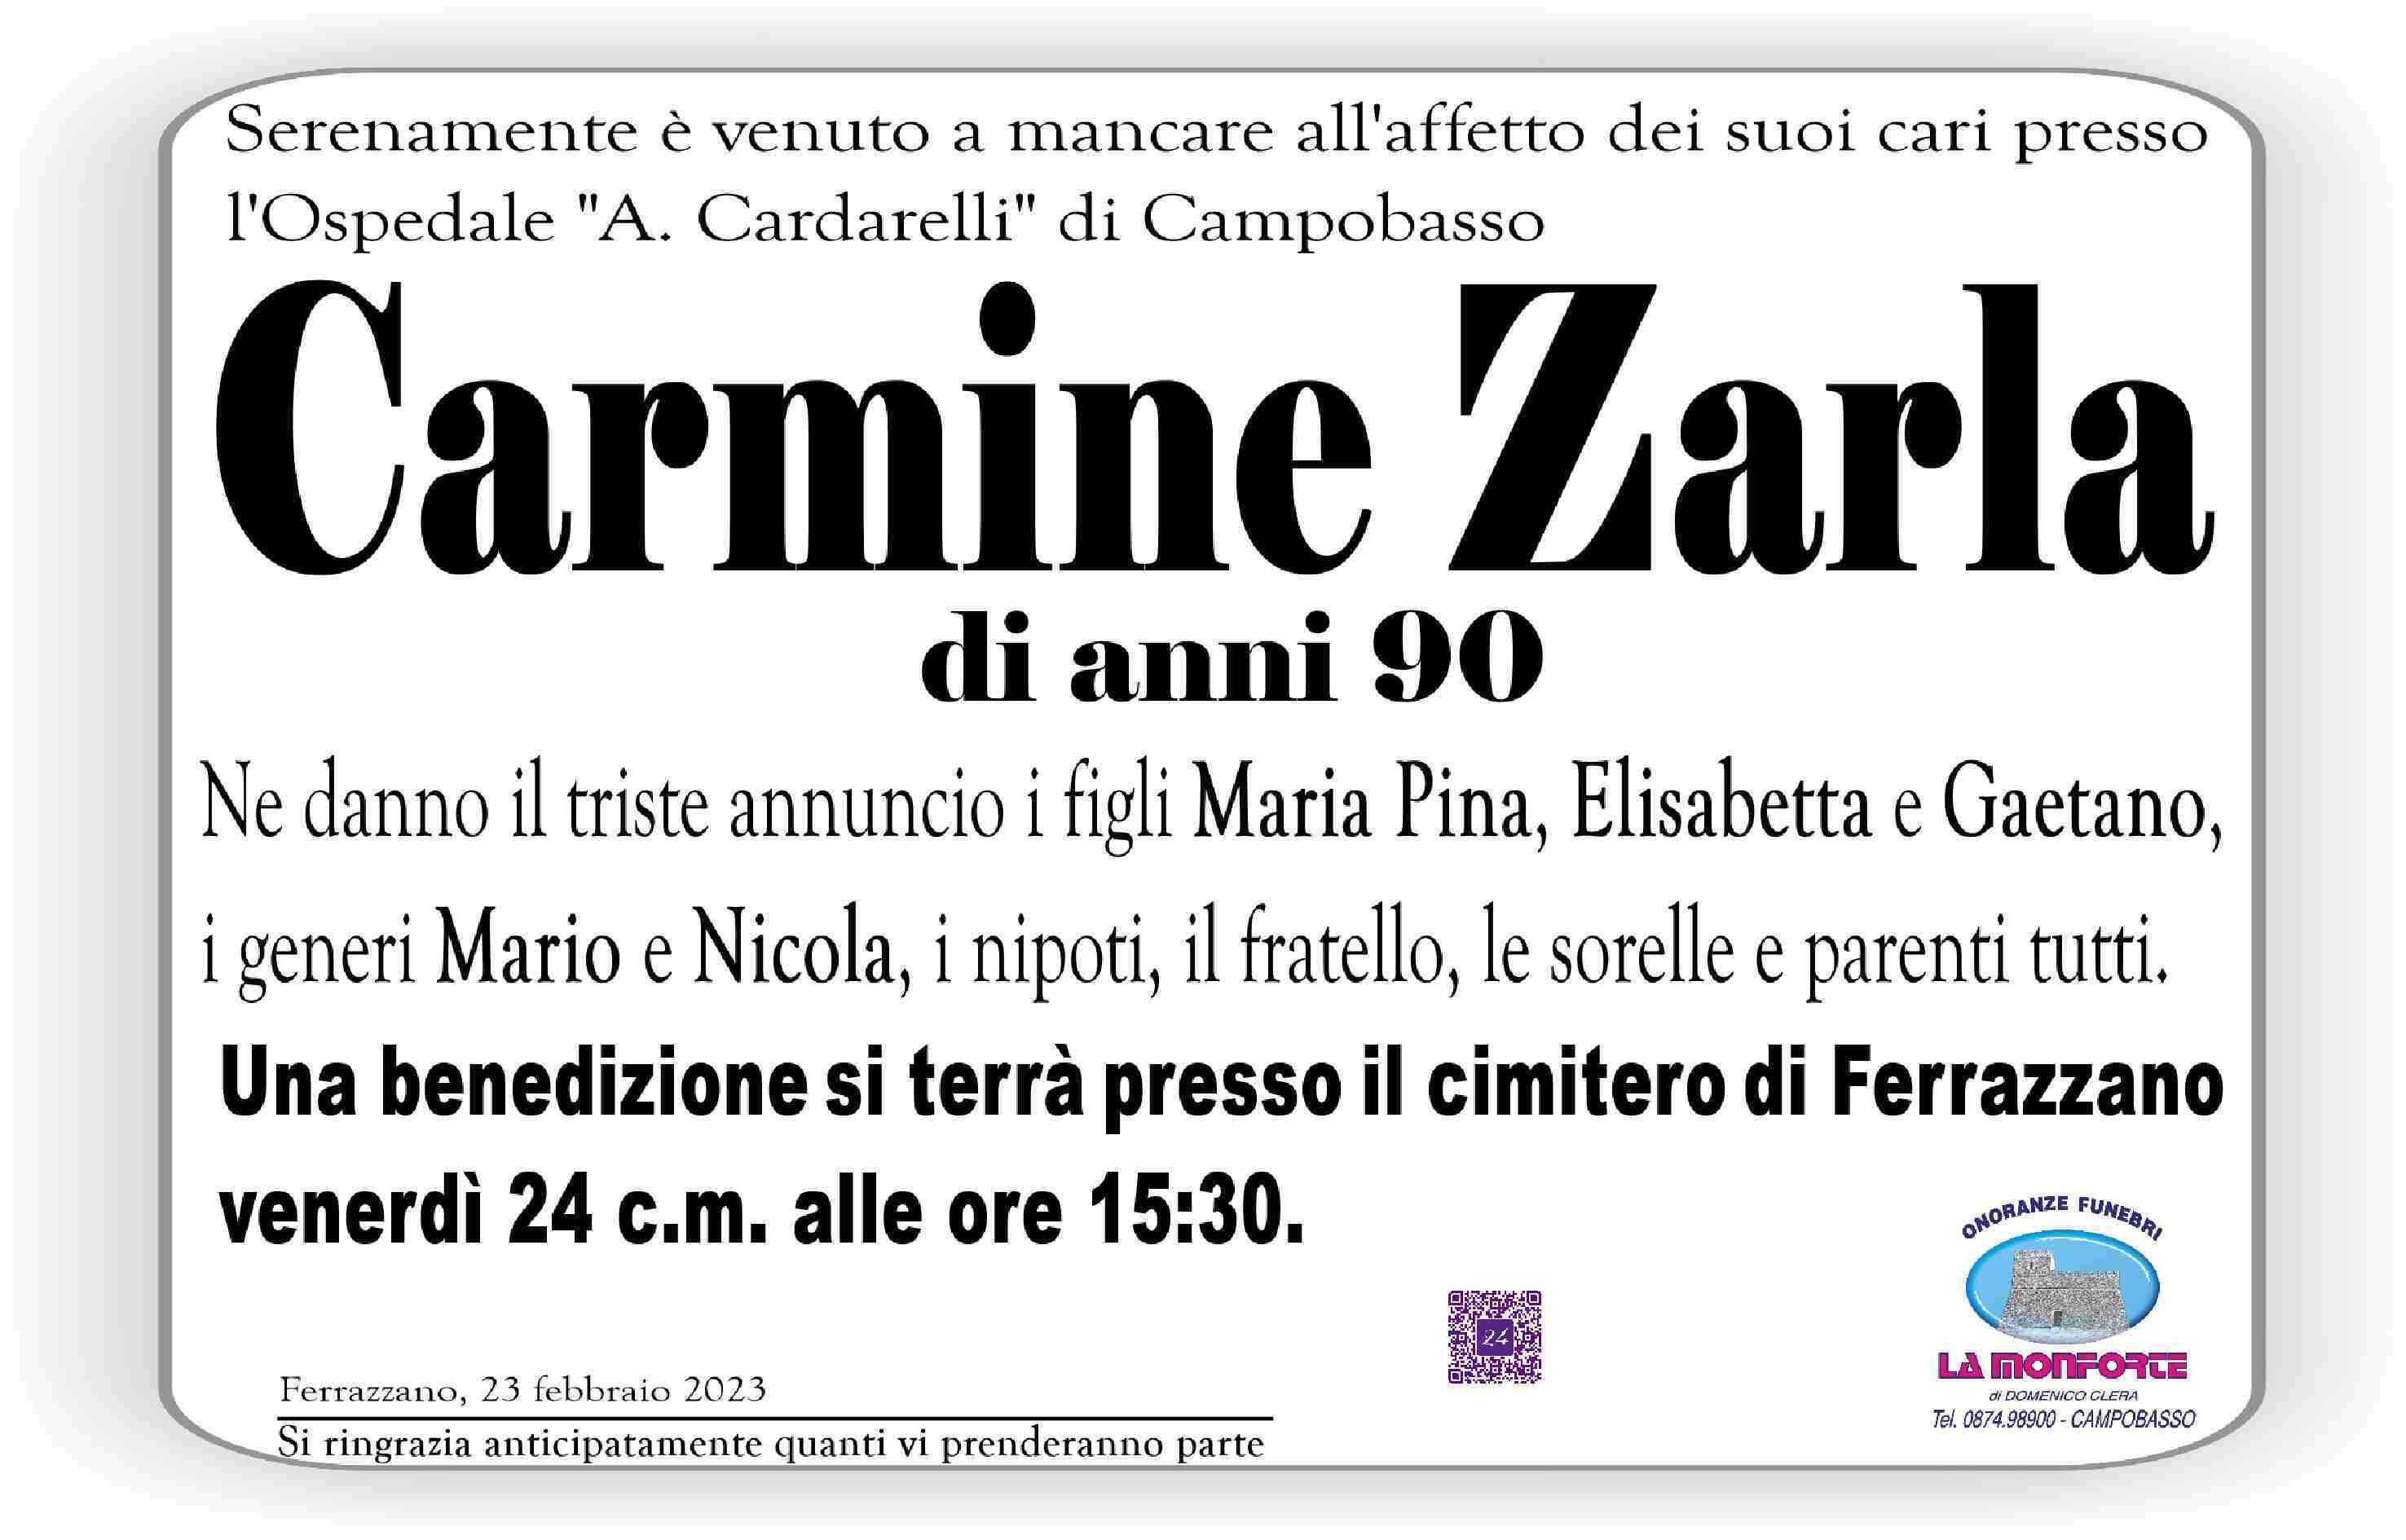 Carmine Zarla